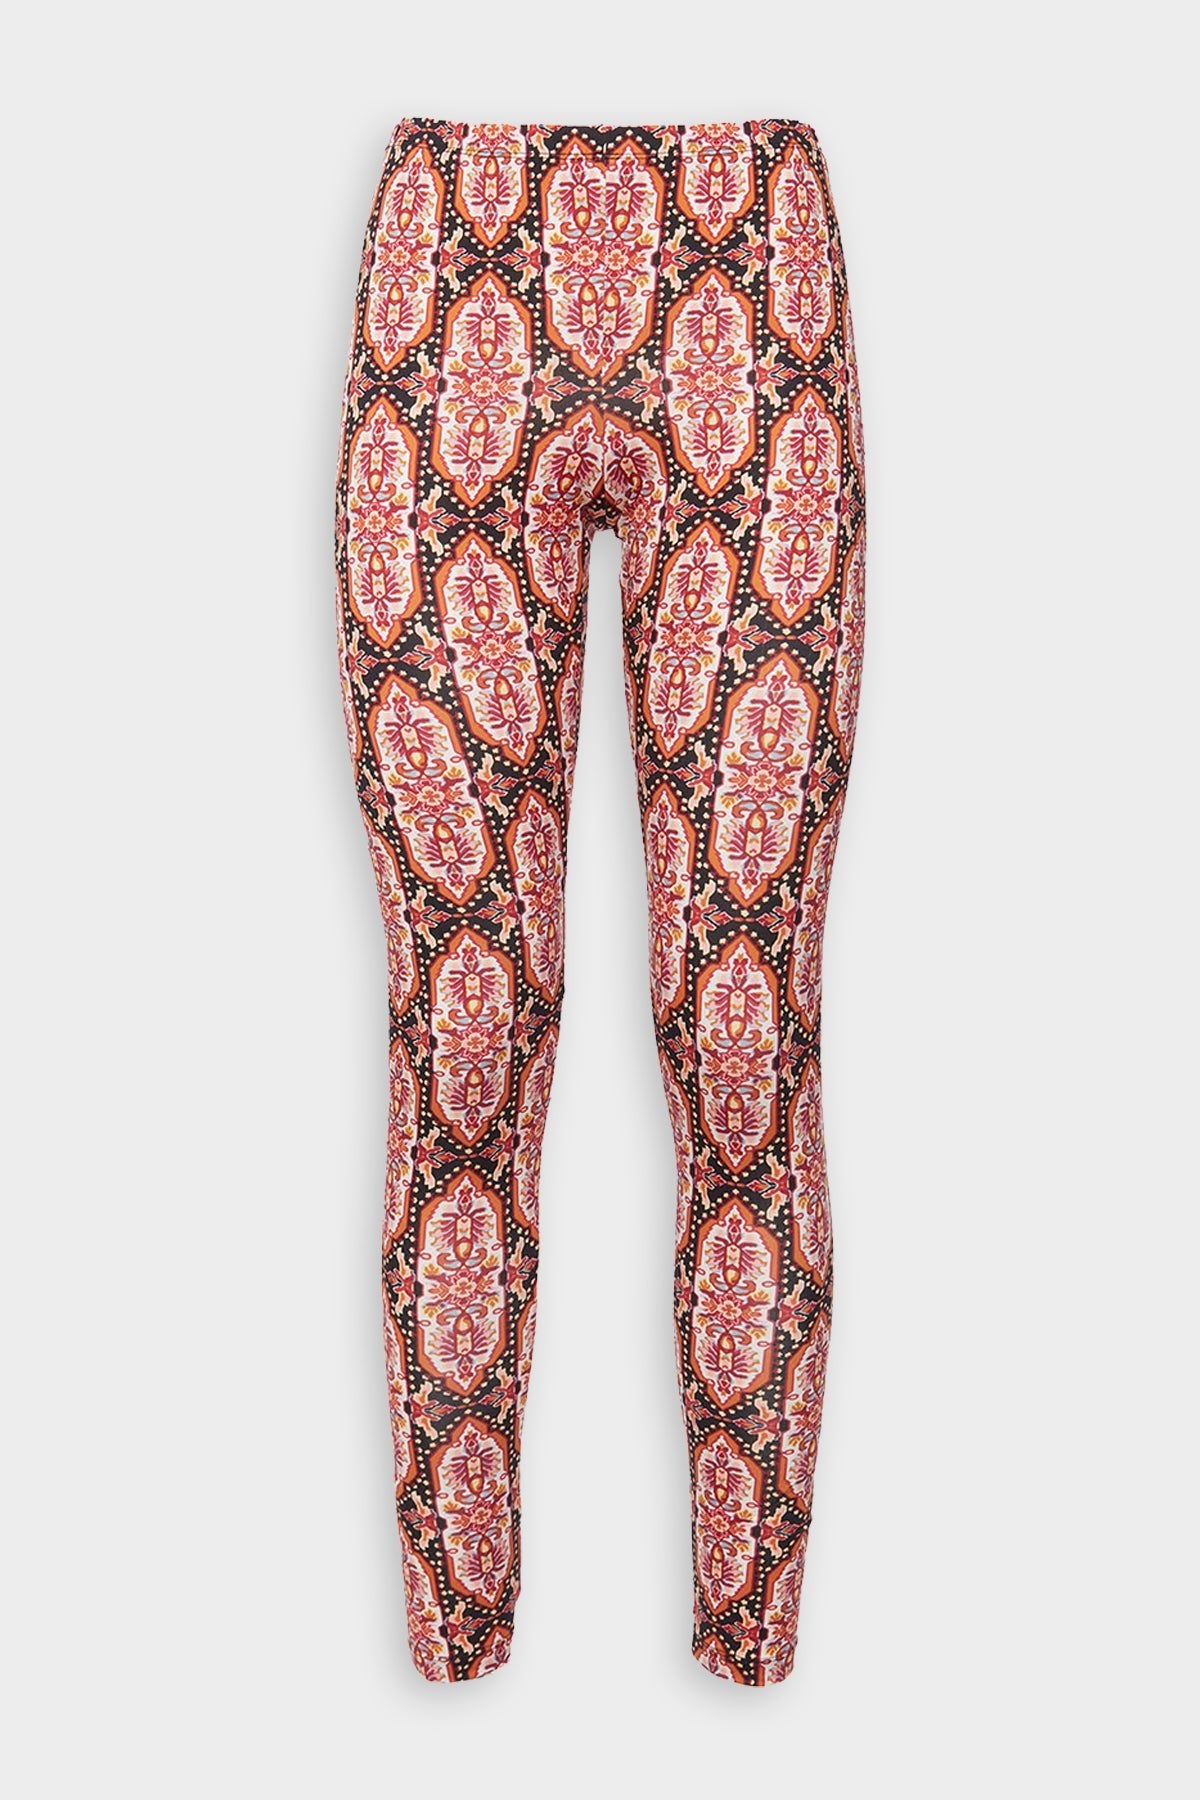 Leggings in Tapestry - shop-olivia.com